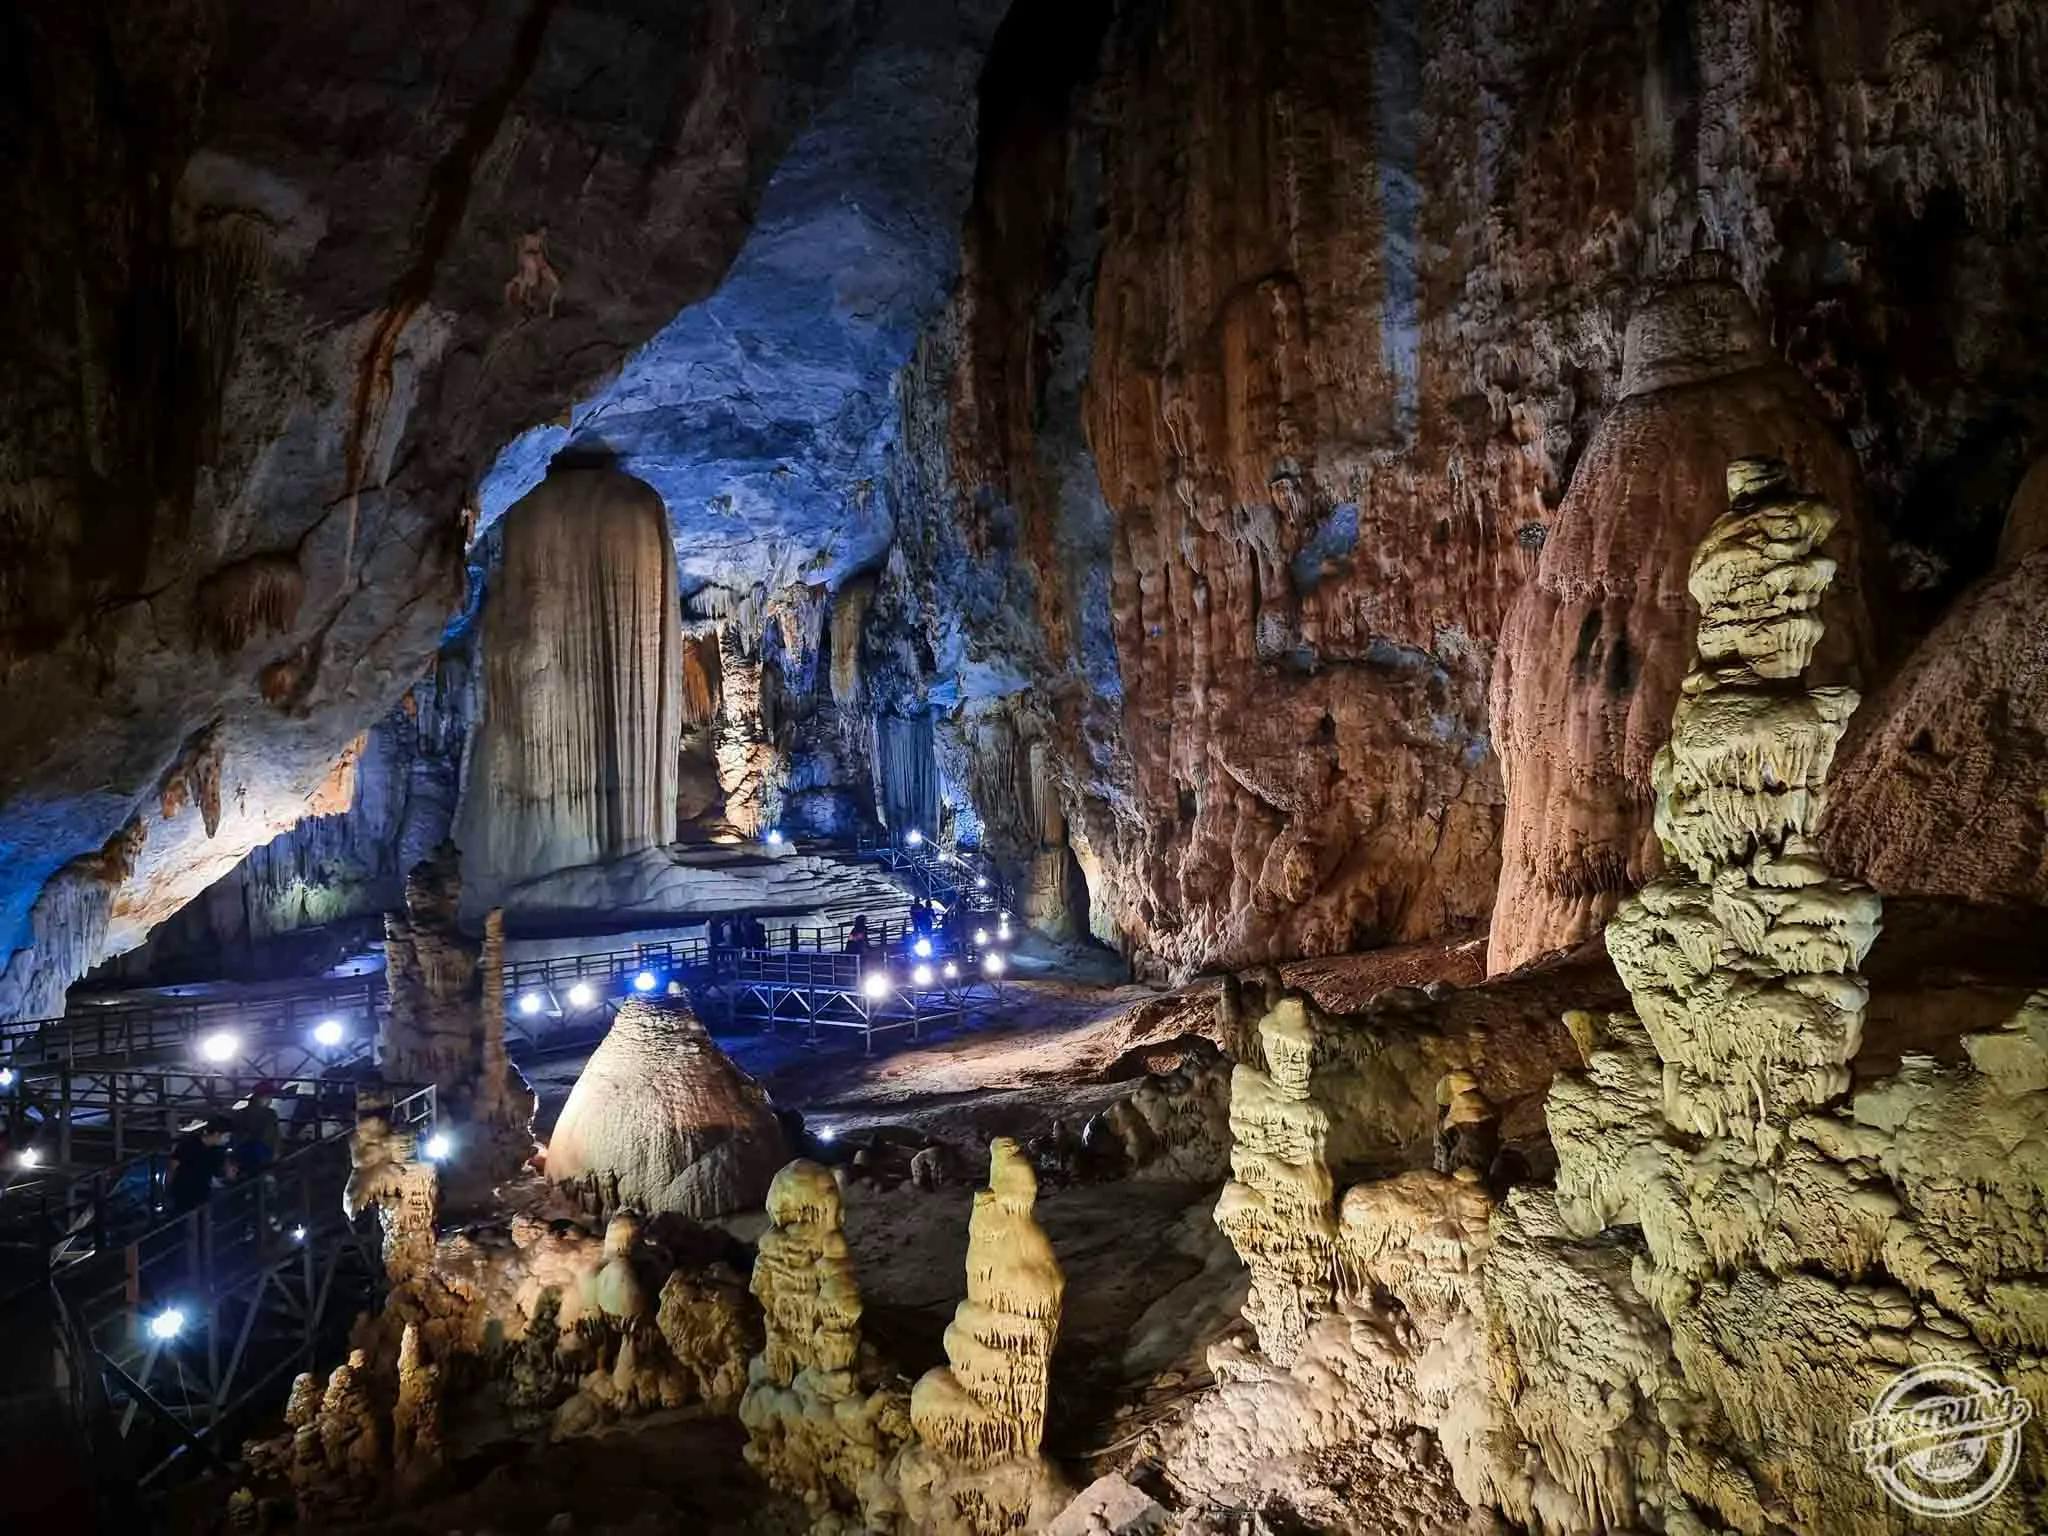 Phong Nha Cave in Quang Binh